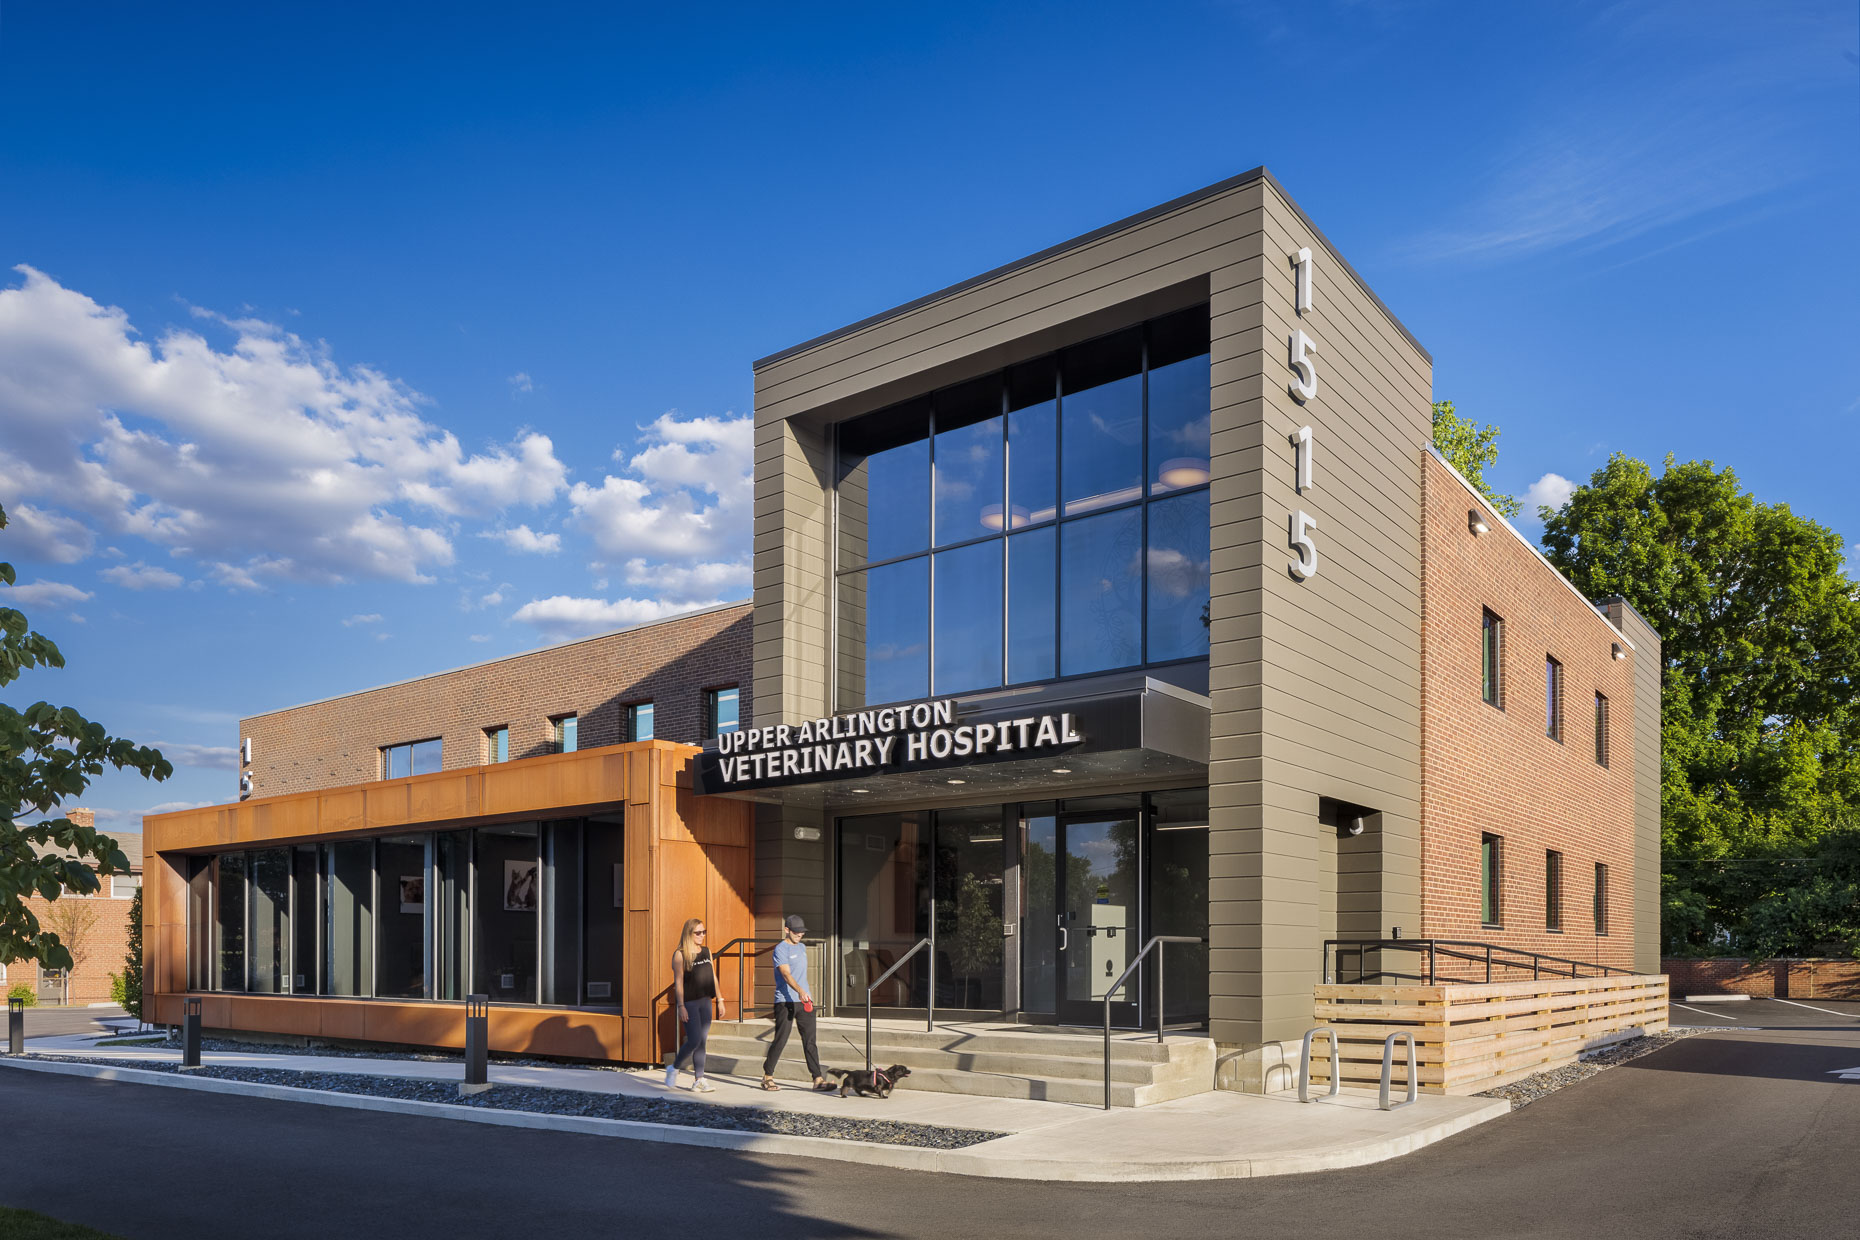 Upper Arlington Veterinary Hospital by Gunzelman Architecture + Interiors photographed by Lauren K Davis based in Columbus, Ohio